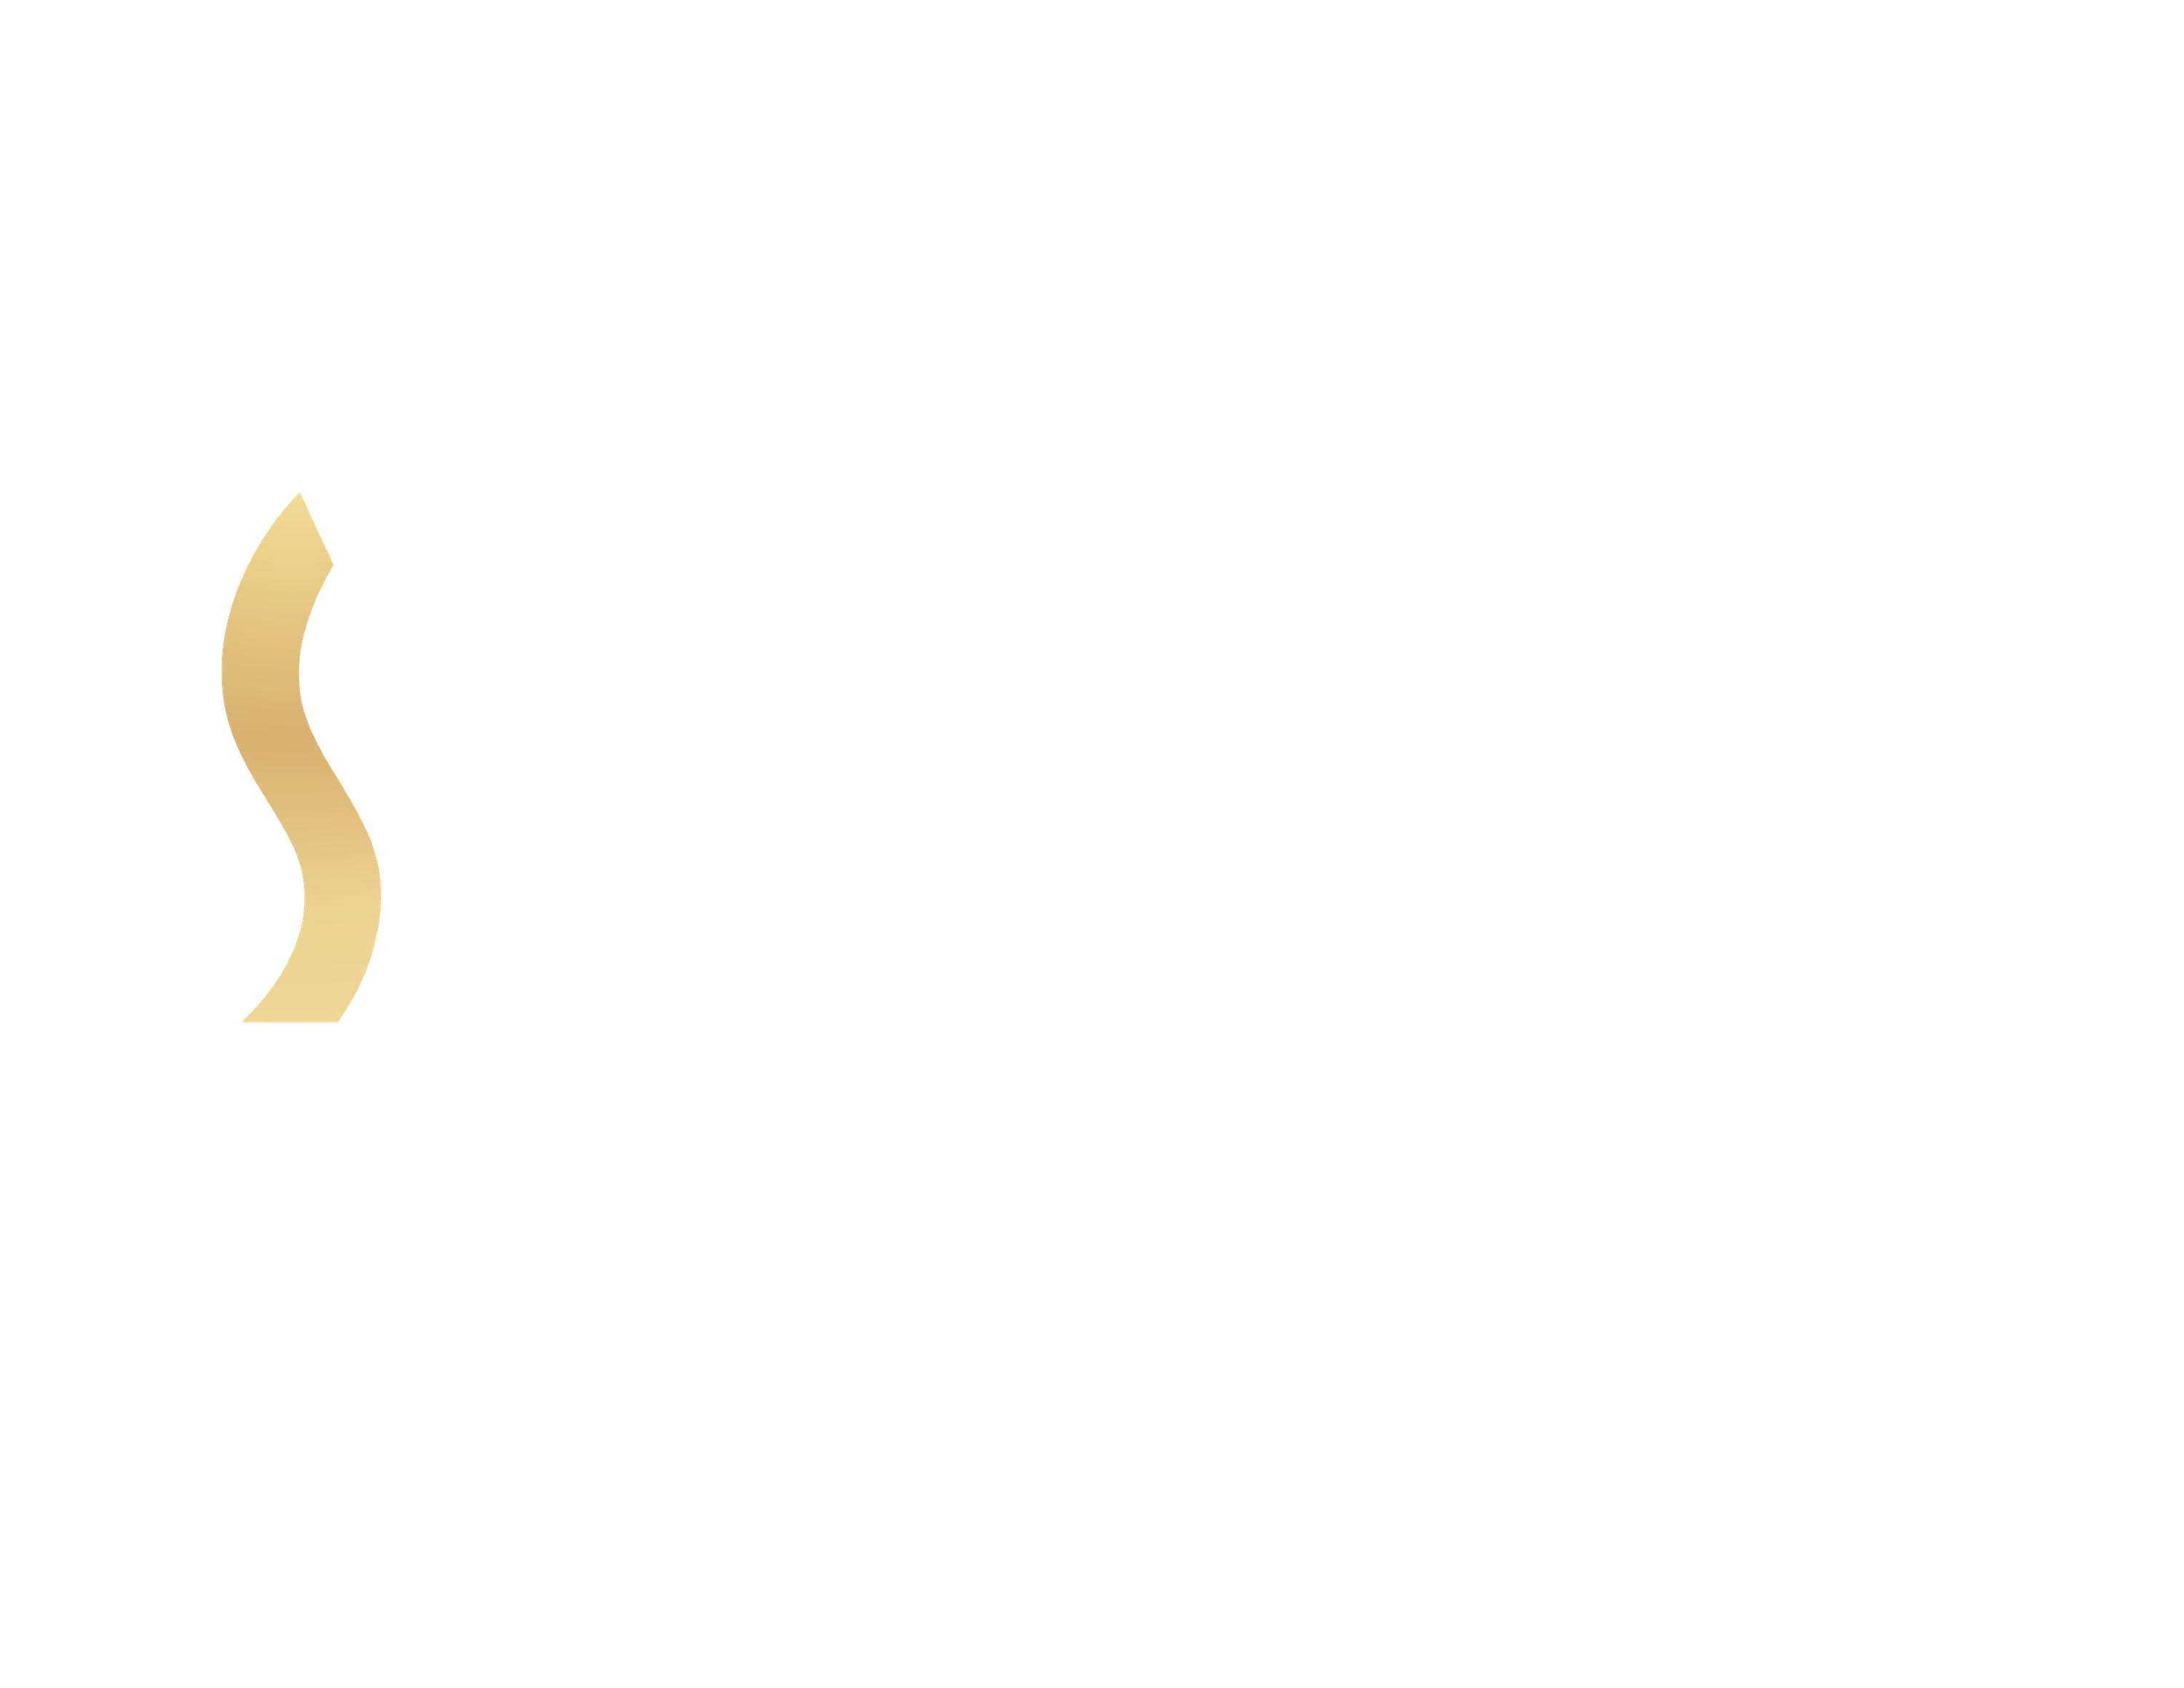 Hotel Spiwak Chipichape